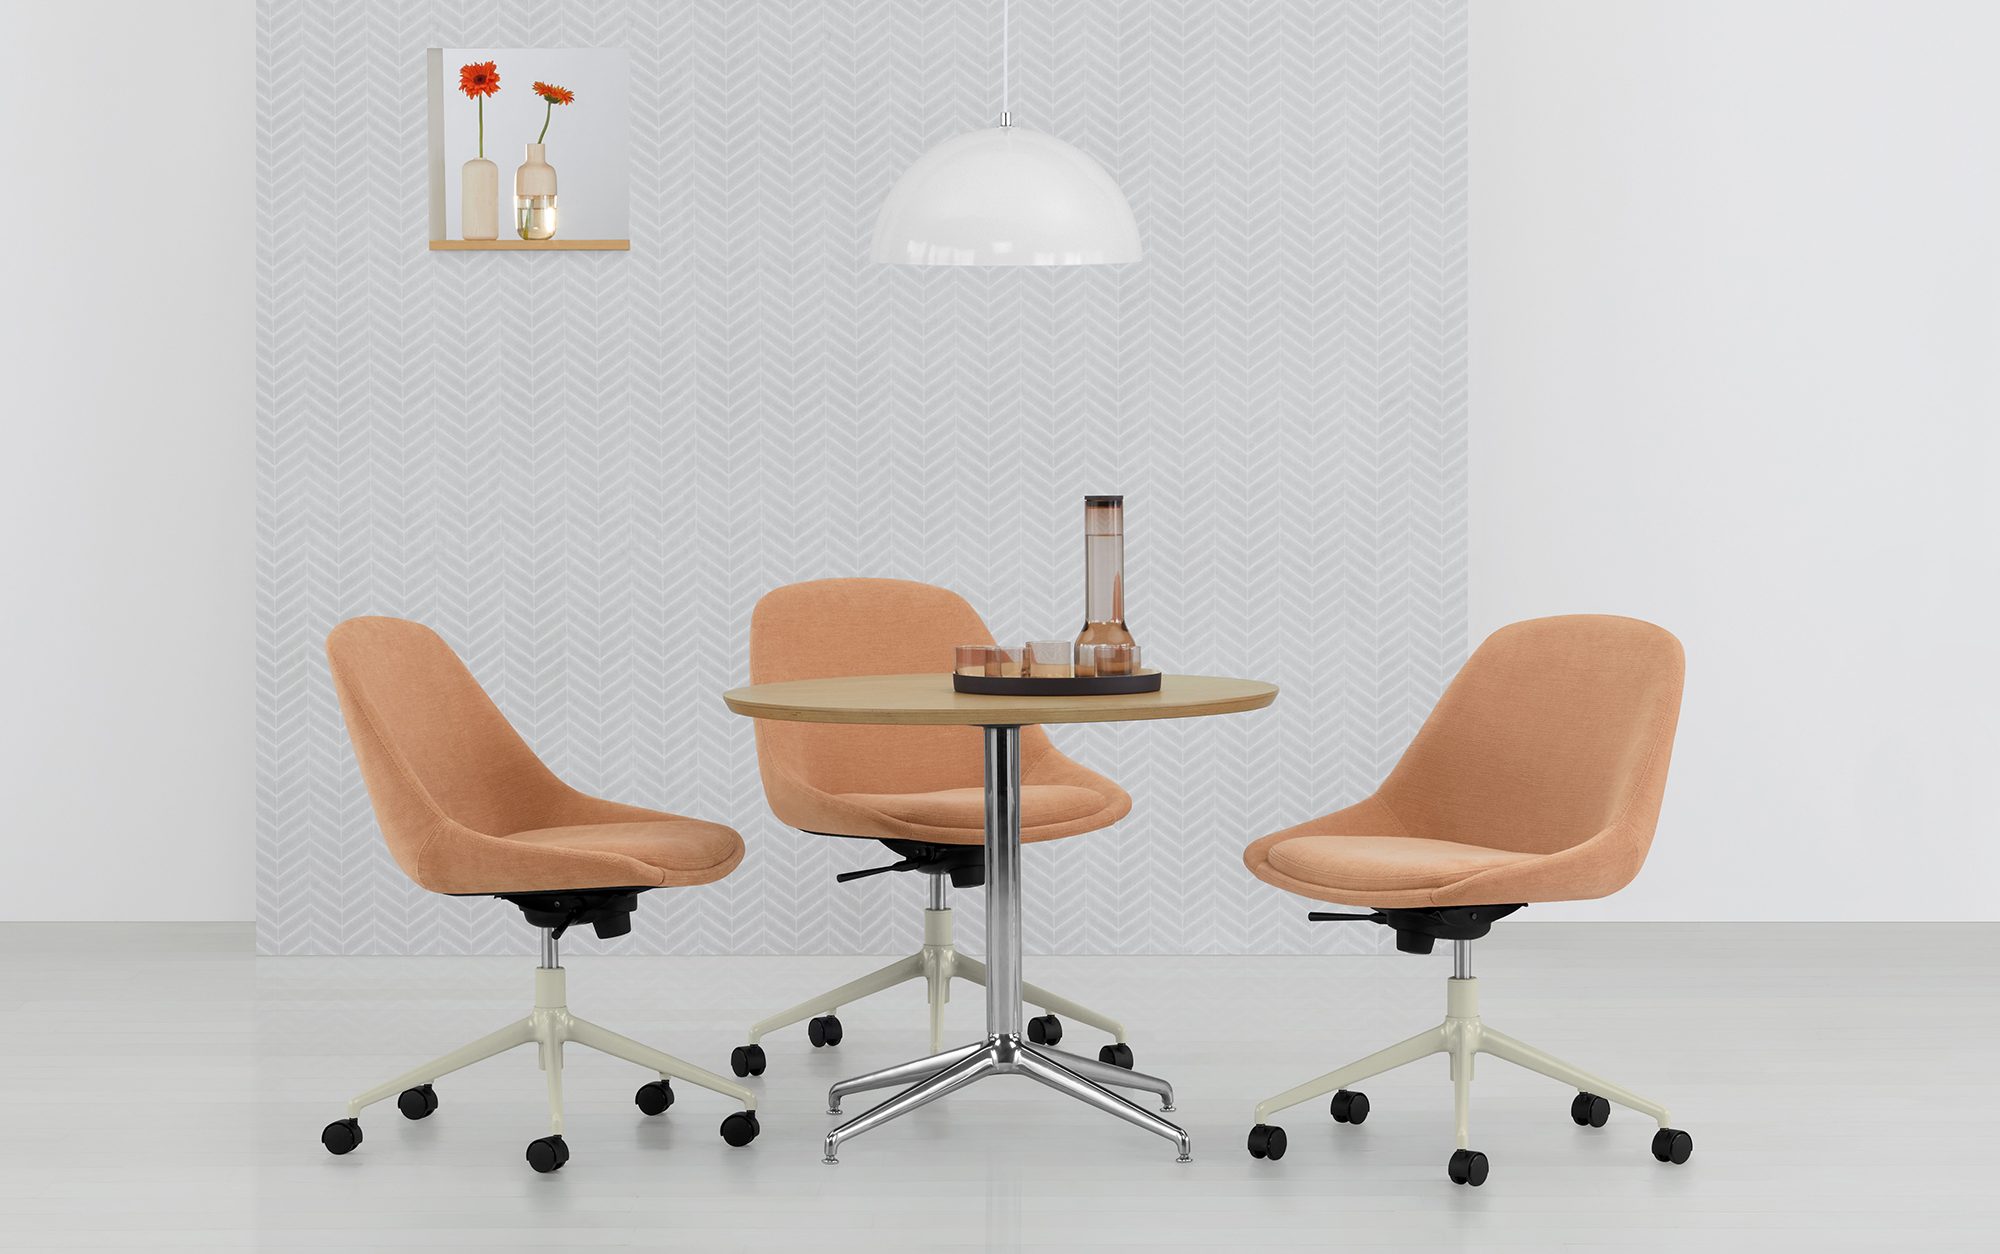 Hoom Swivel Chairs, Casual Meeting Application